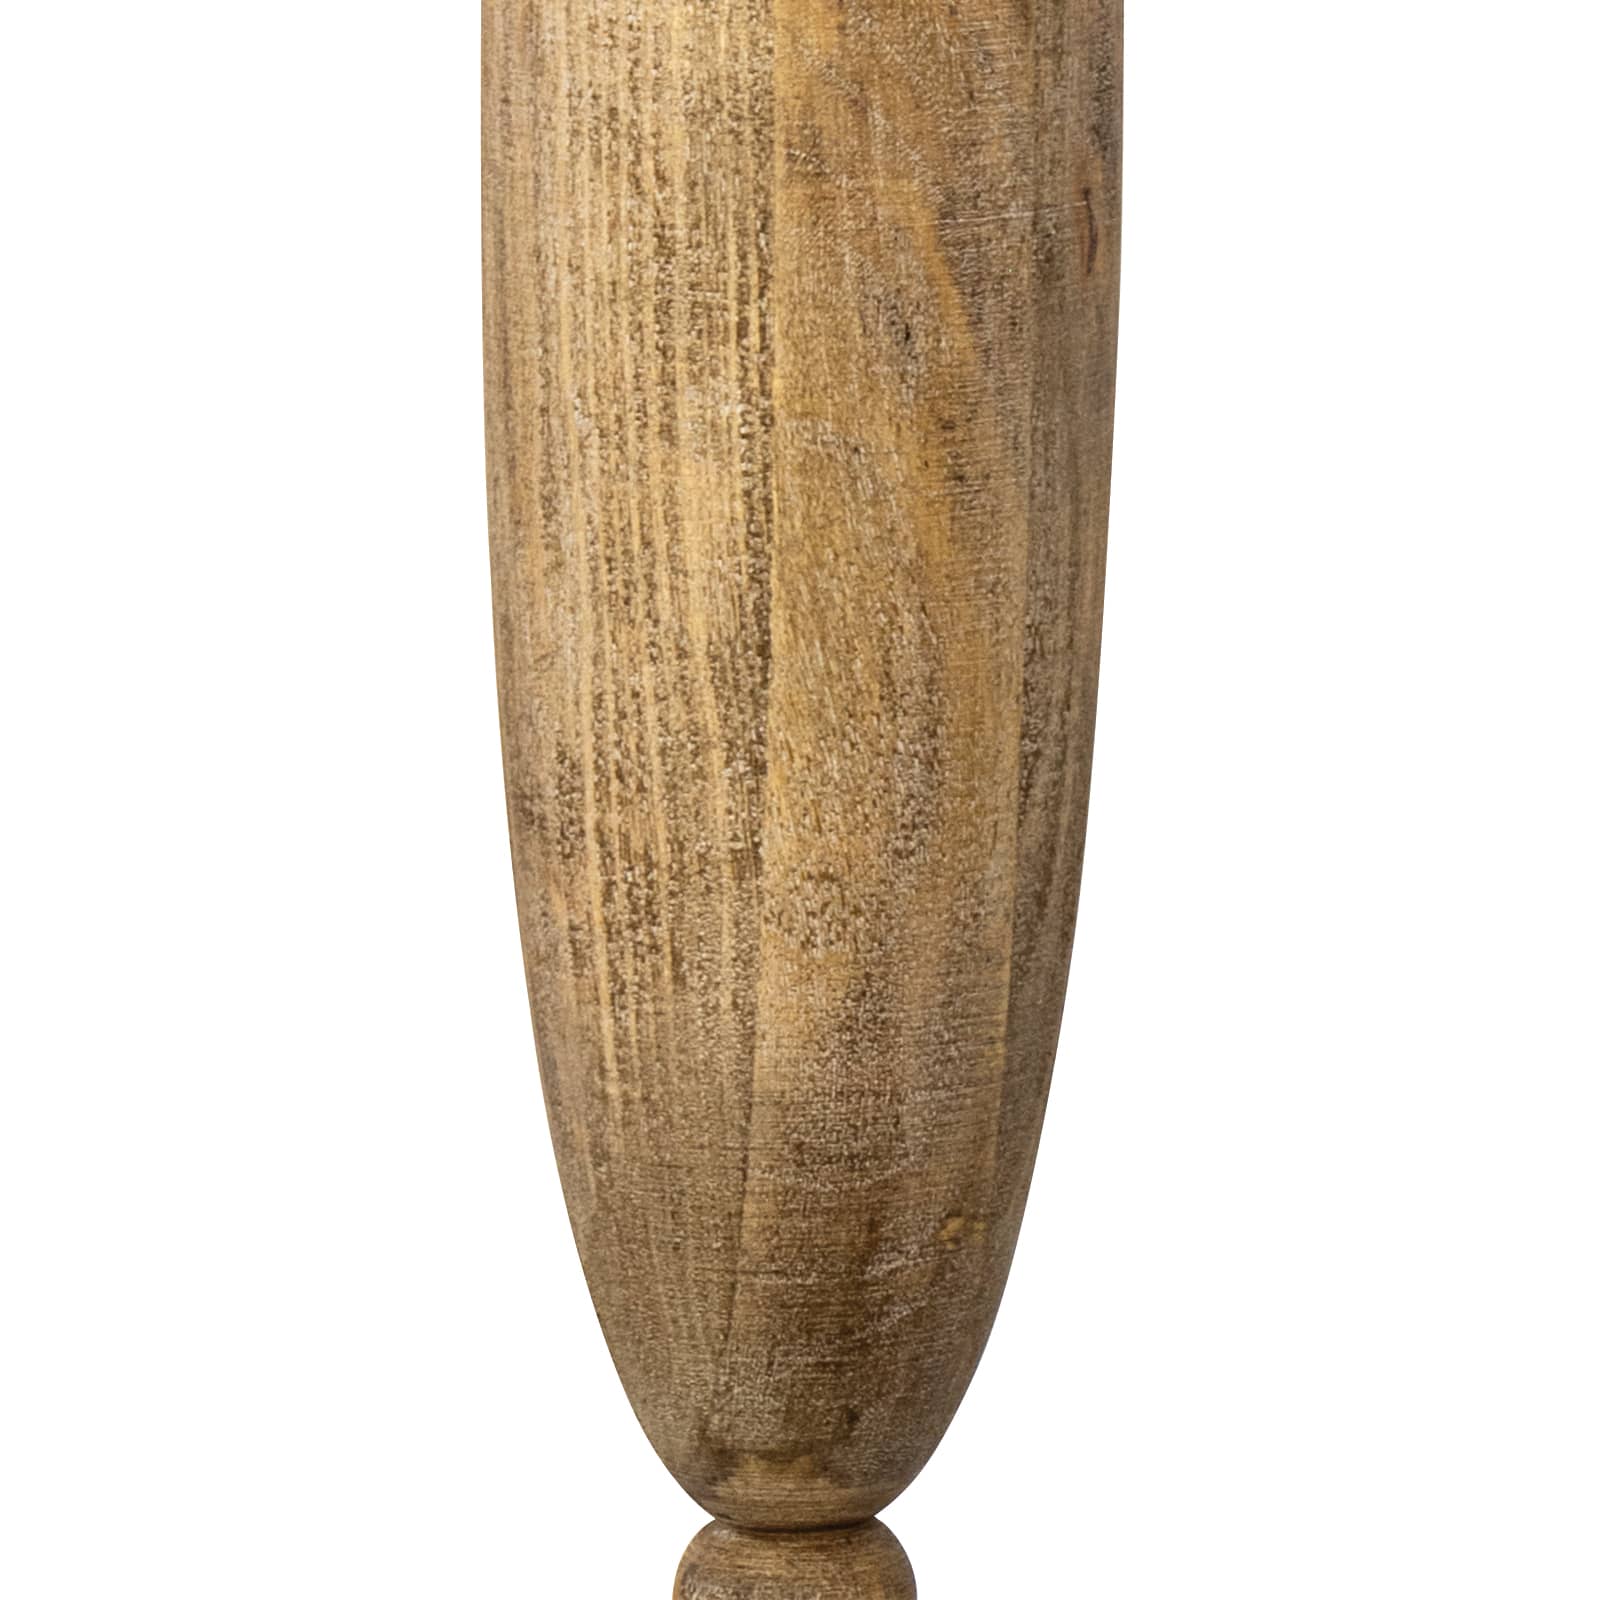 Georgina Wood Table Lamp - Decor - Tipplergoods